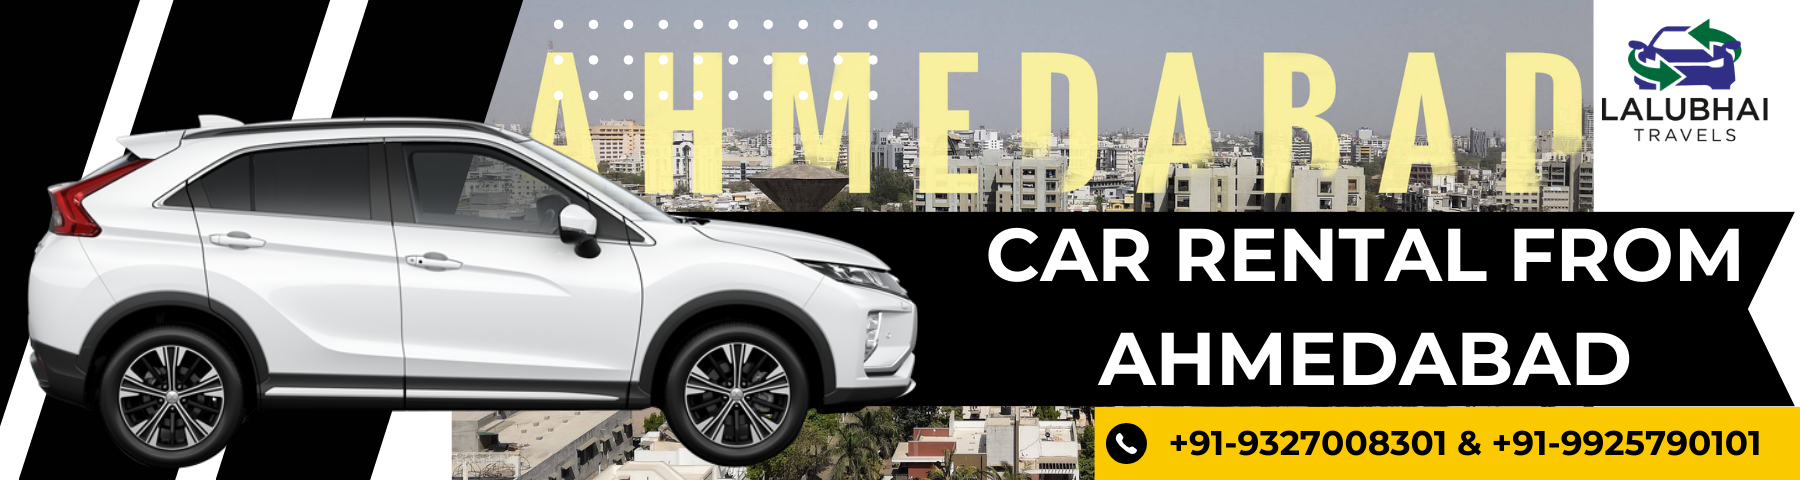 car rental ahmedabad